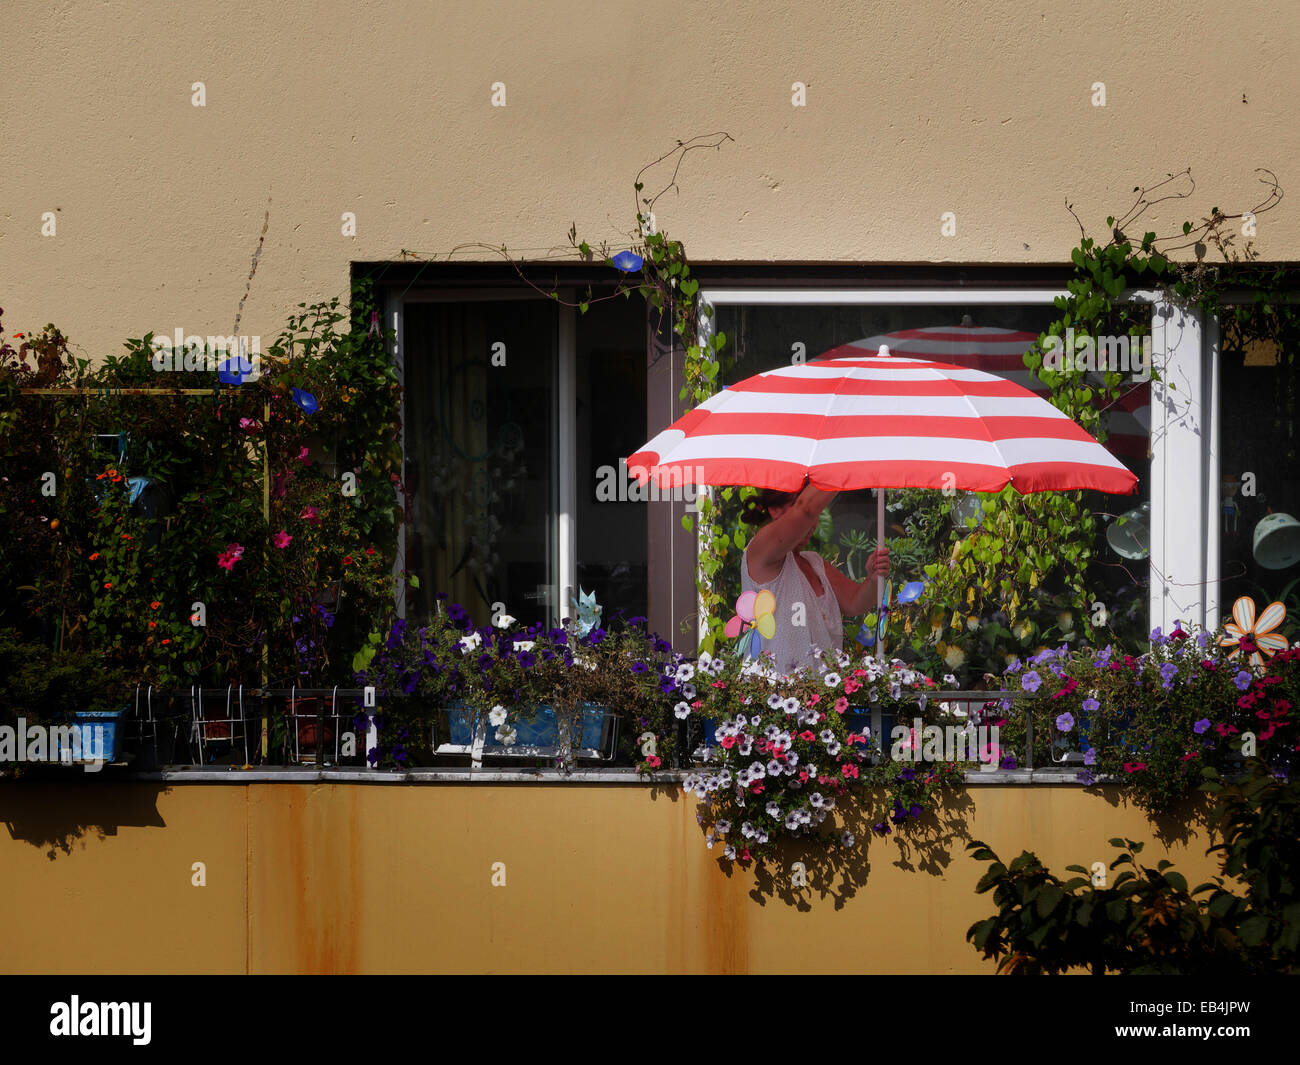 Housewife open her Sun umbrella on the Balcony Stock Photo